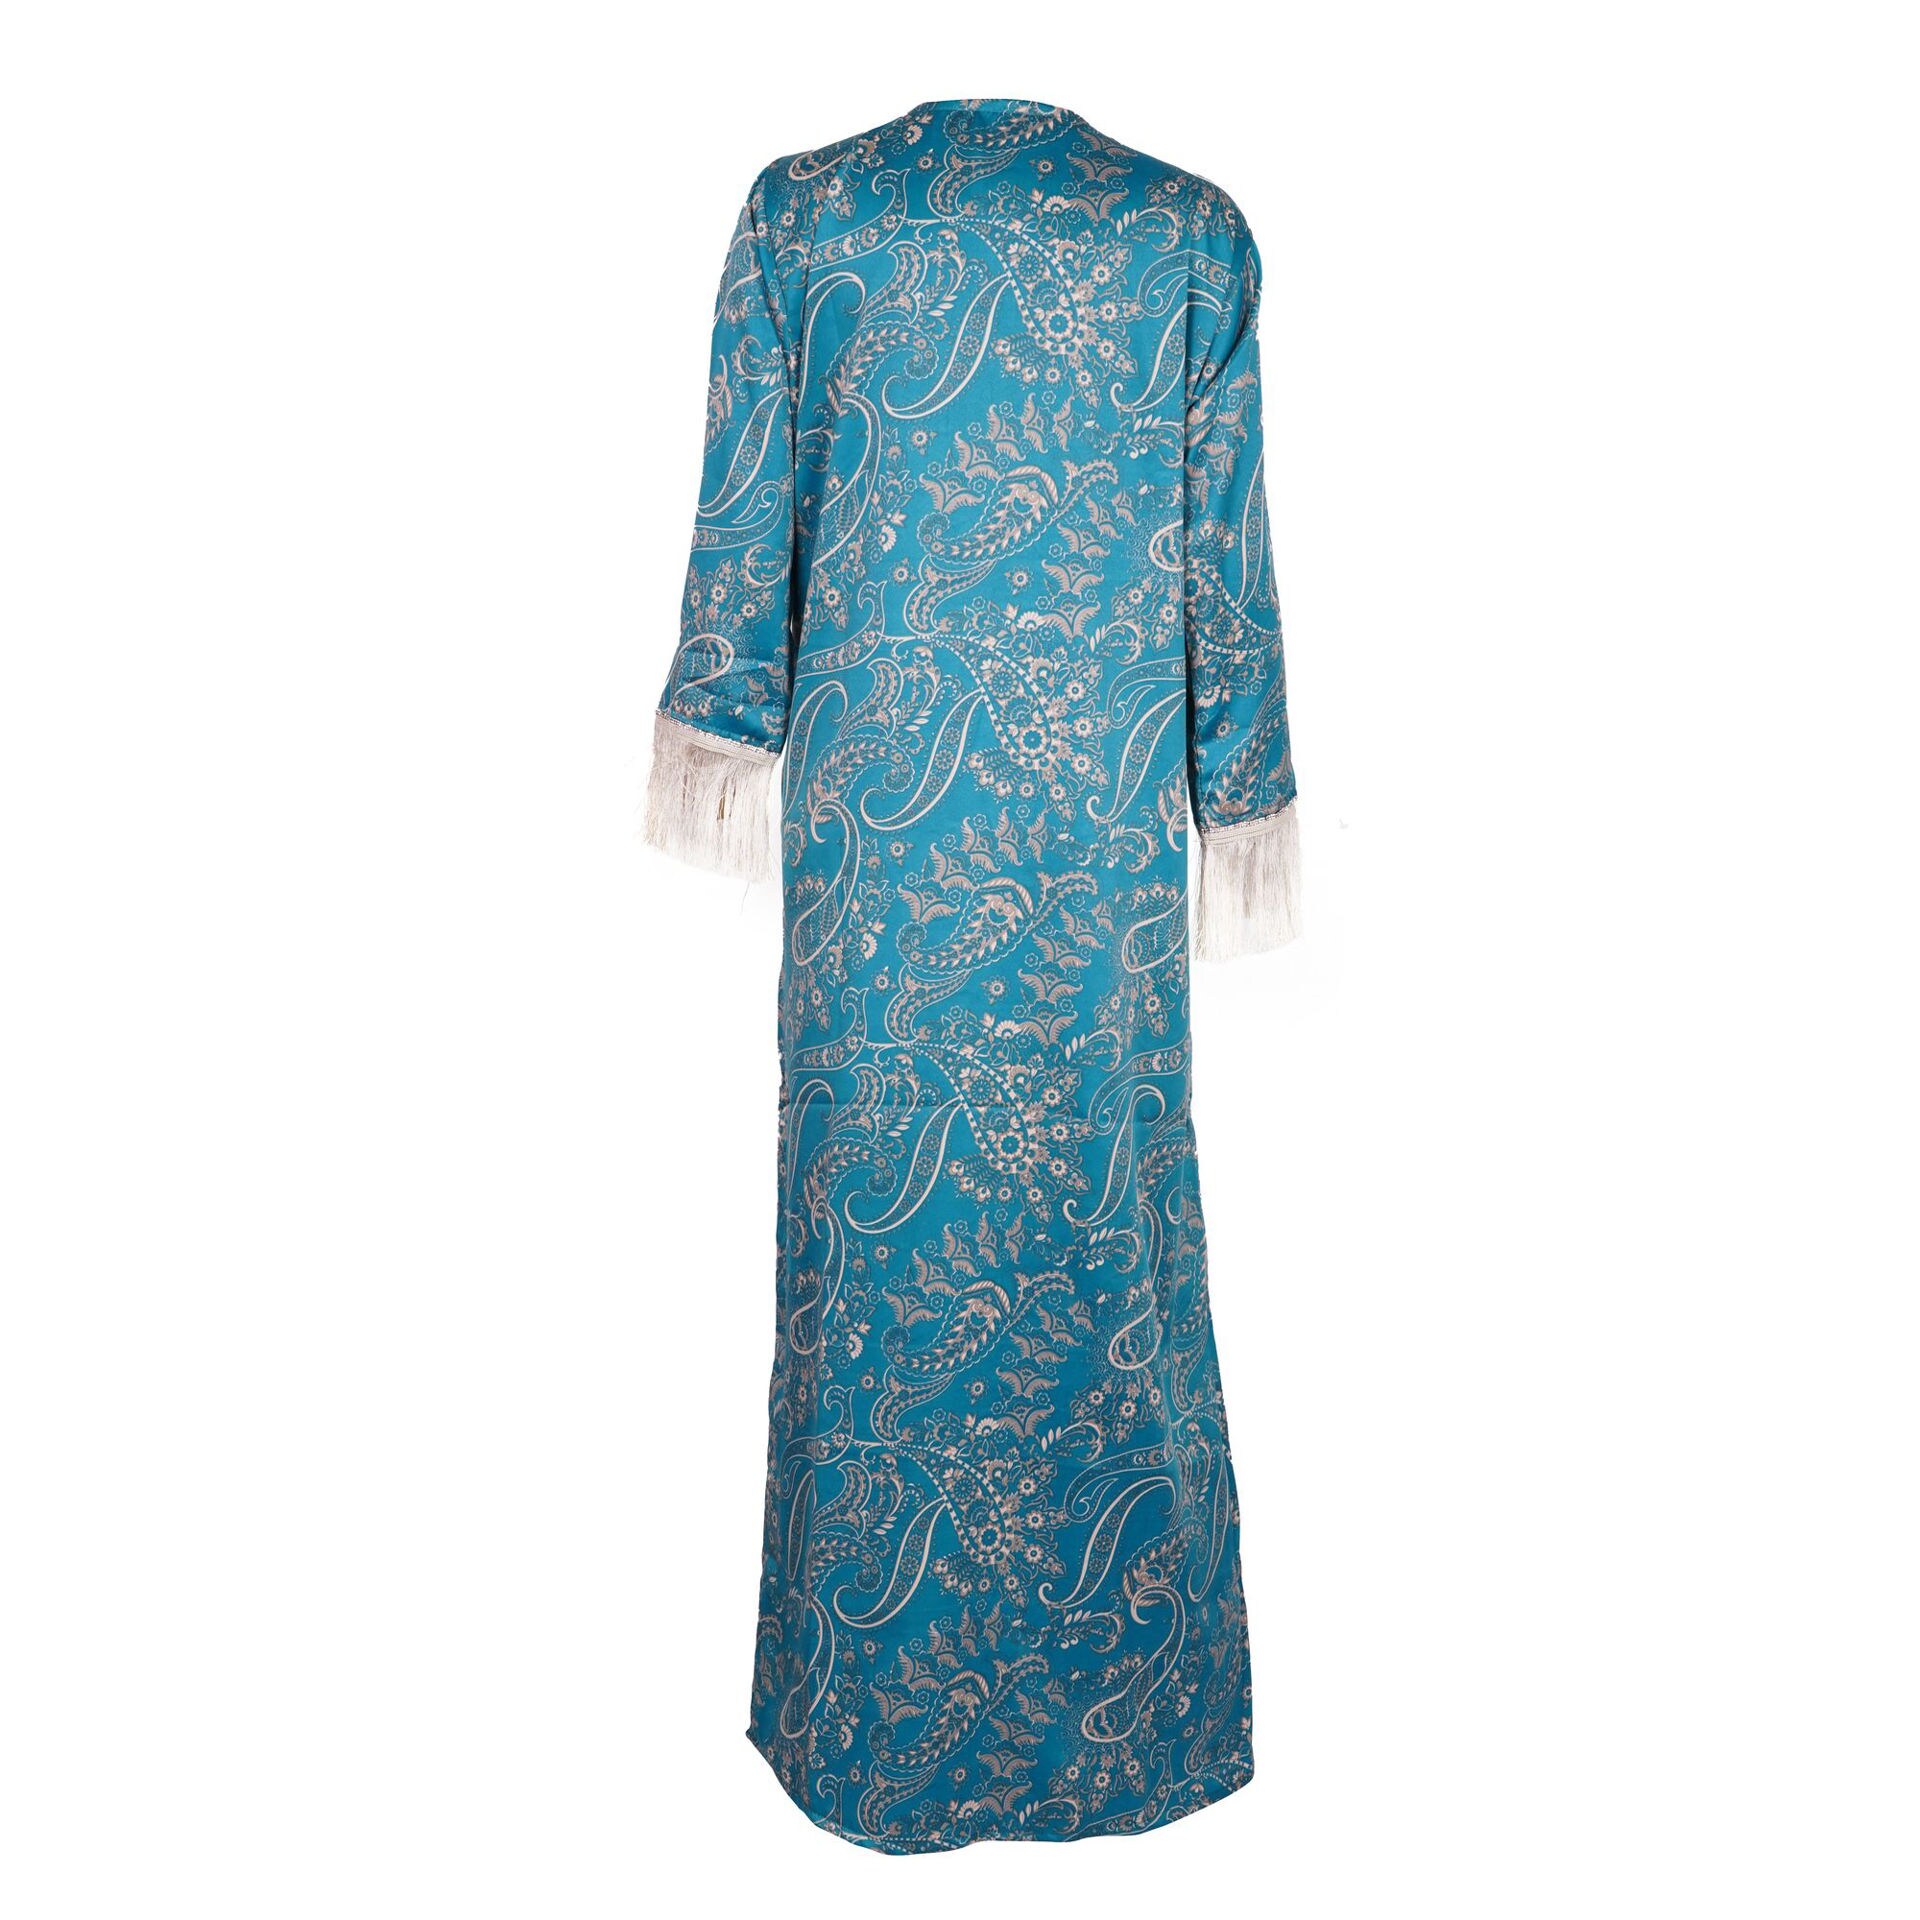 Shop GENET ZWDIE Genet Zwdie Chiffon Artwork Design Mukhawar Dress for ...